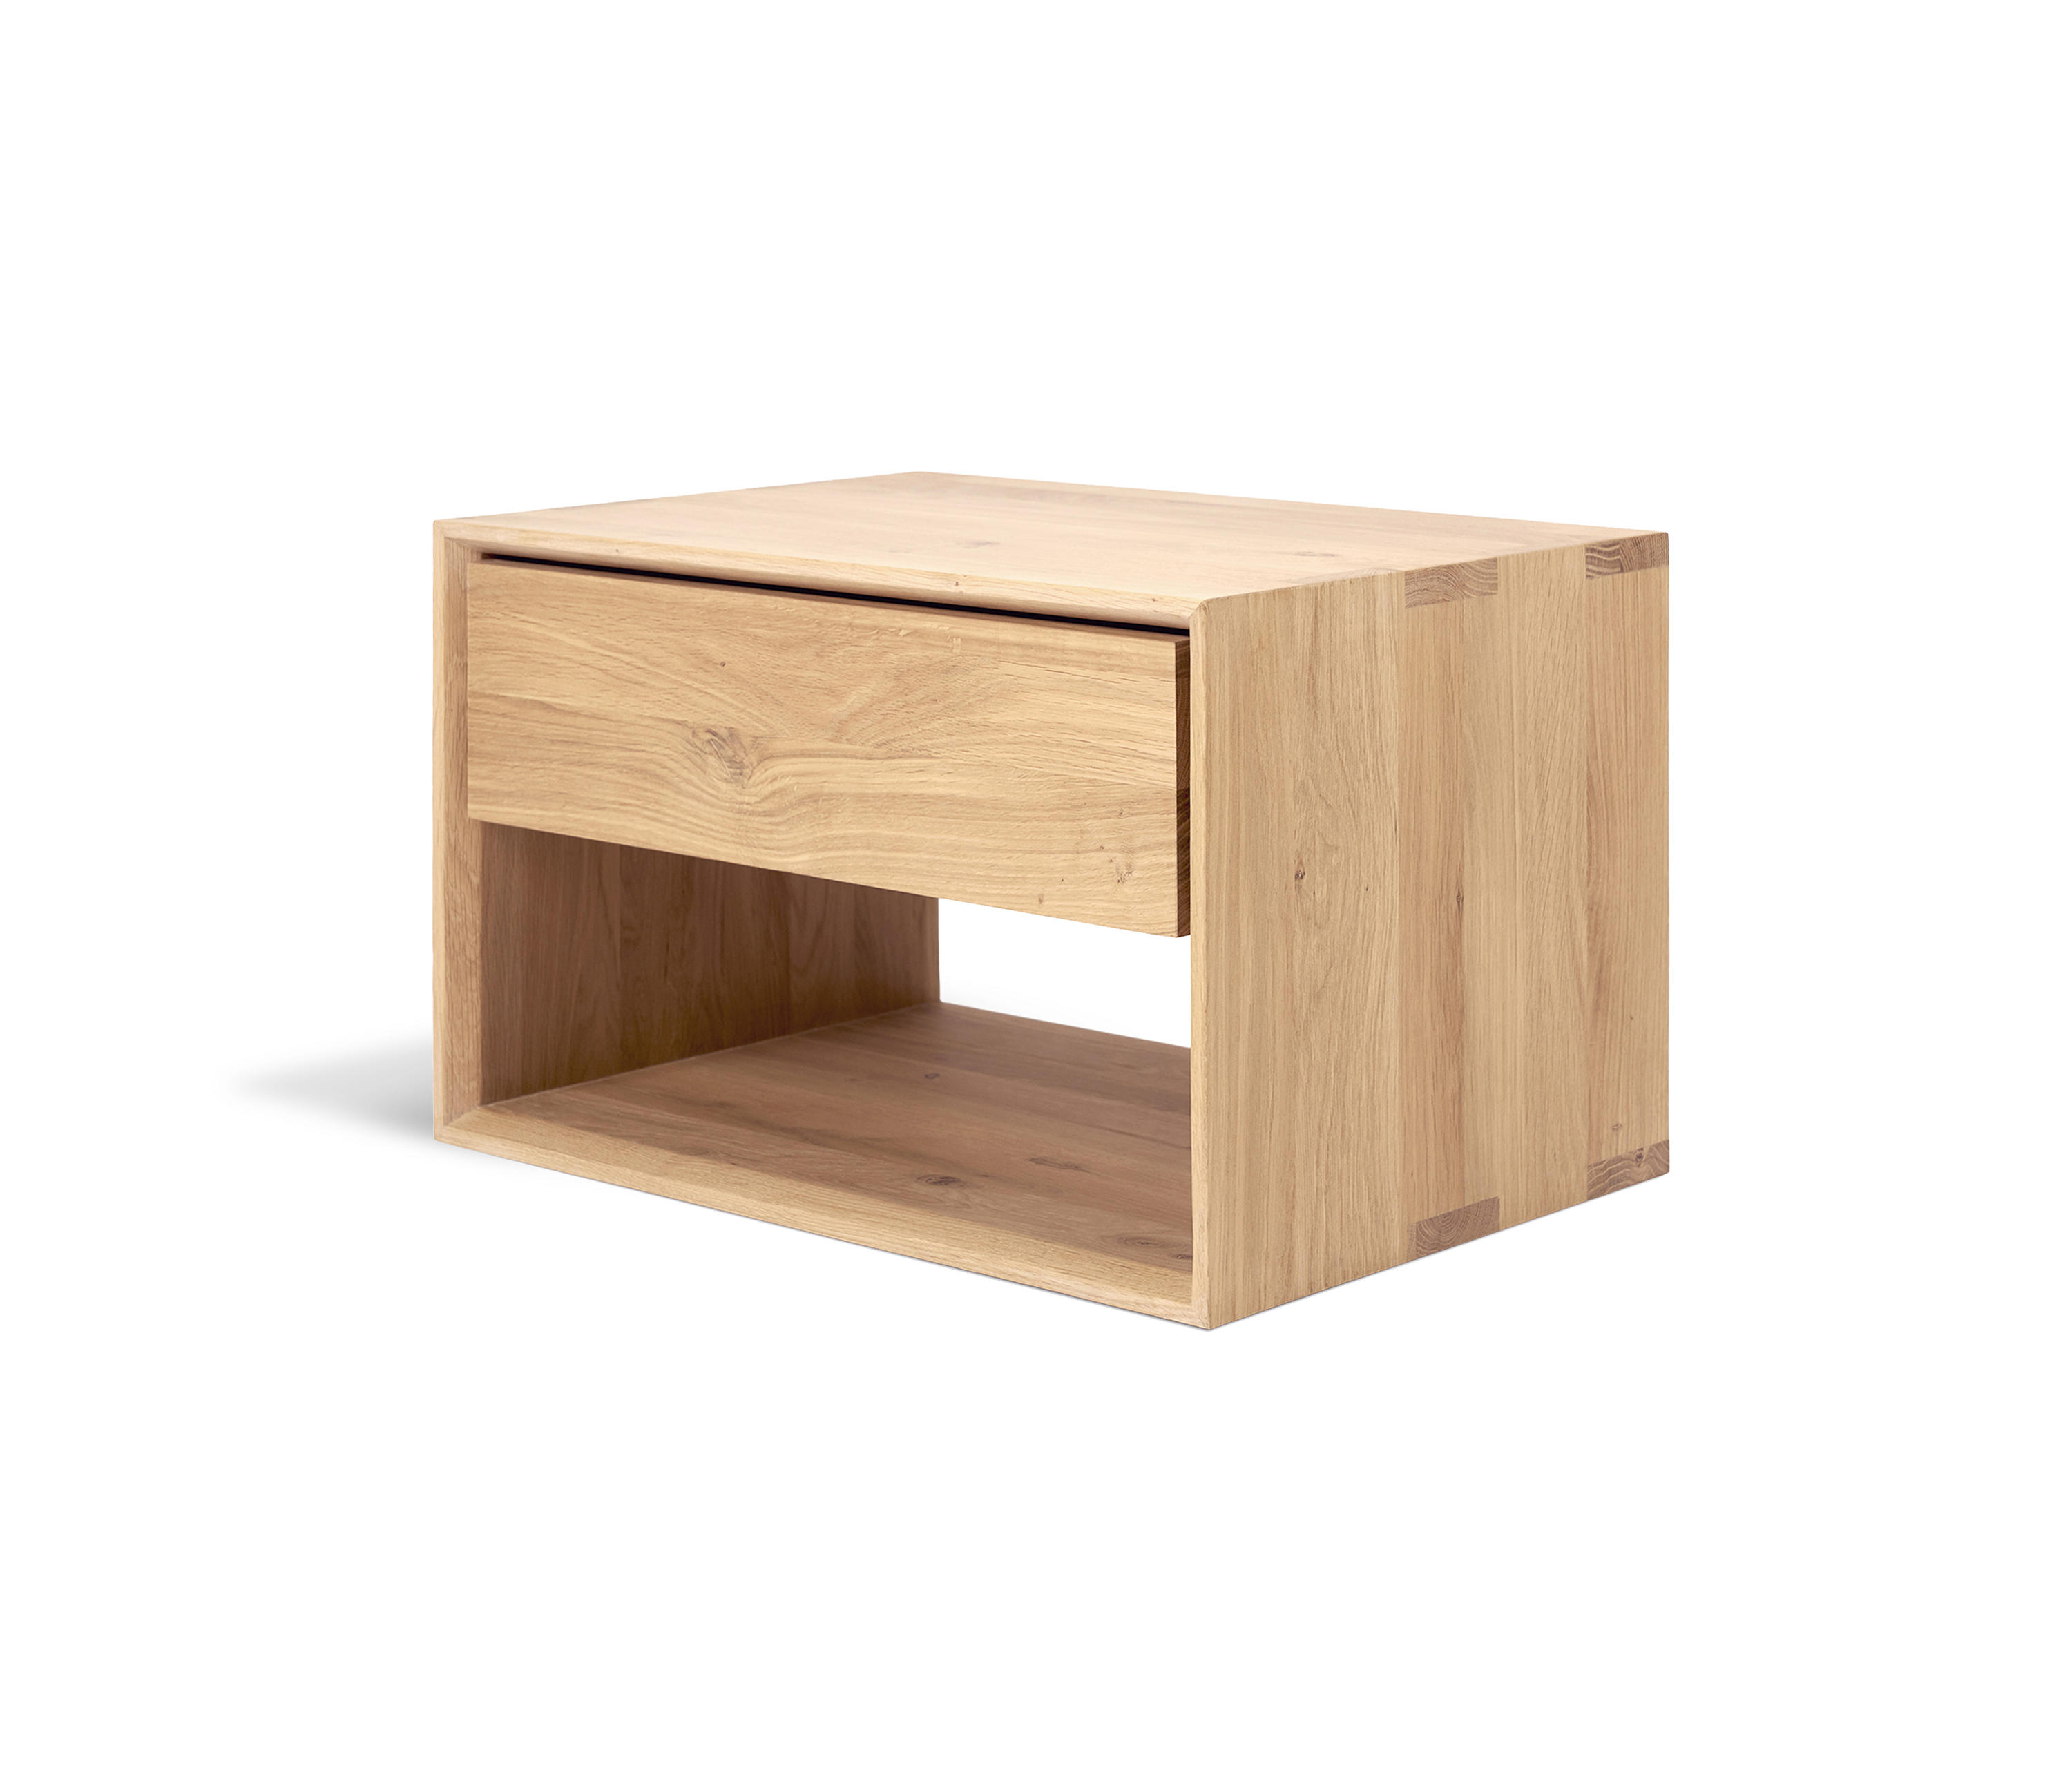 Nordic   Oak II bedside table   20 drawer   Architonic